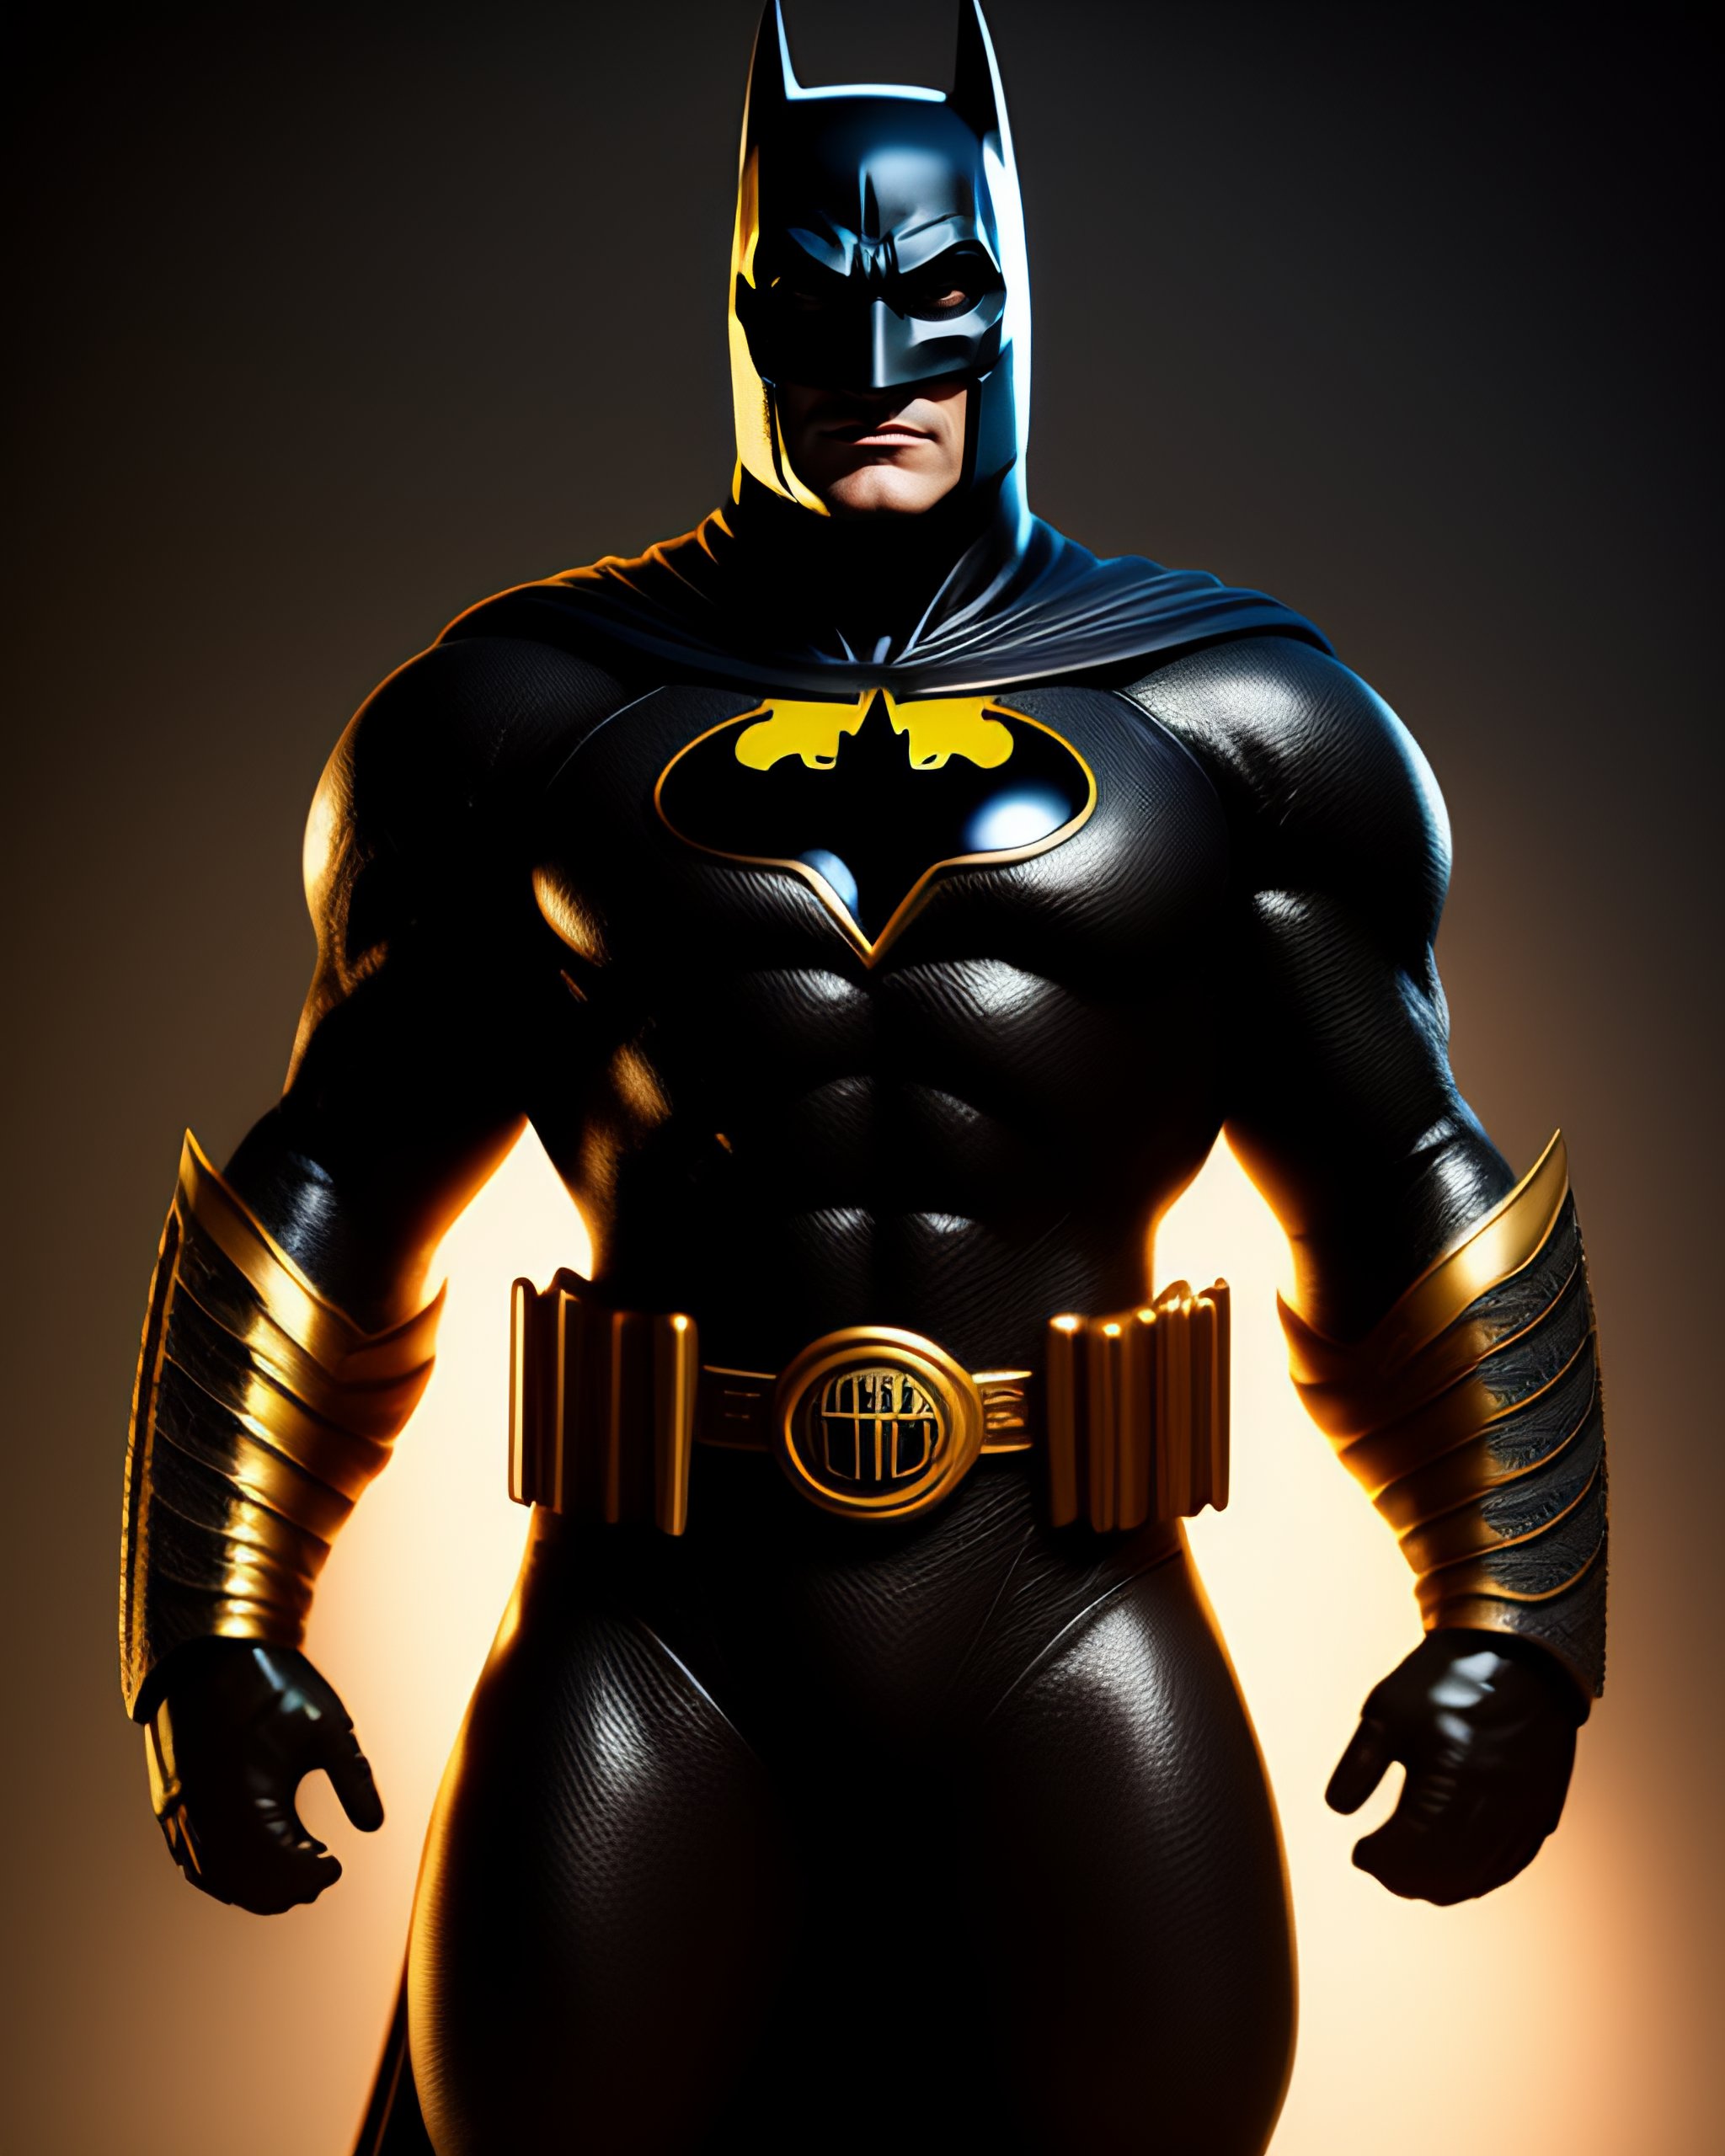 Lexica - Actor Joaquin phoenix as Batman, full hd image and full body  presentation